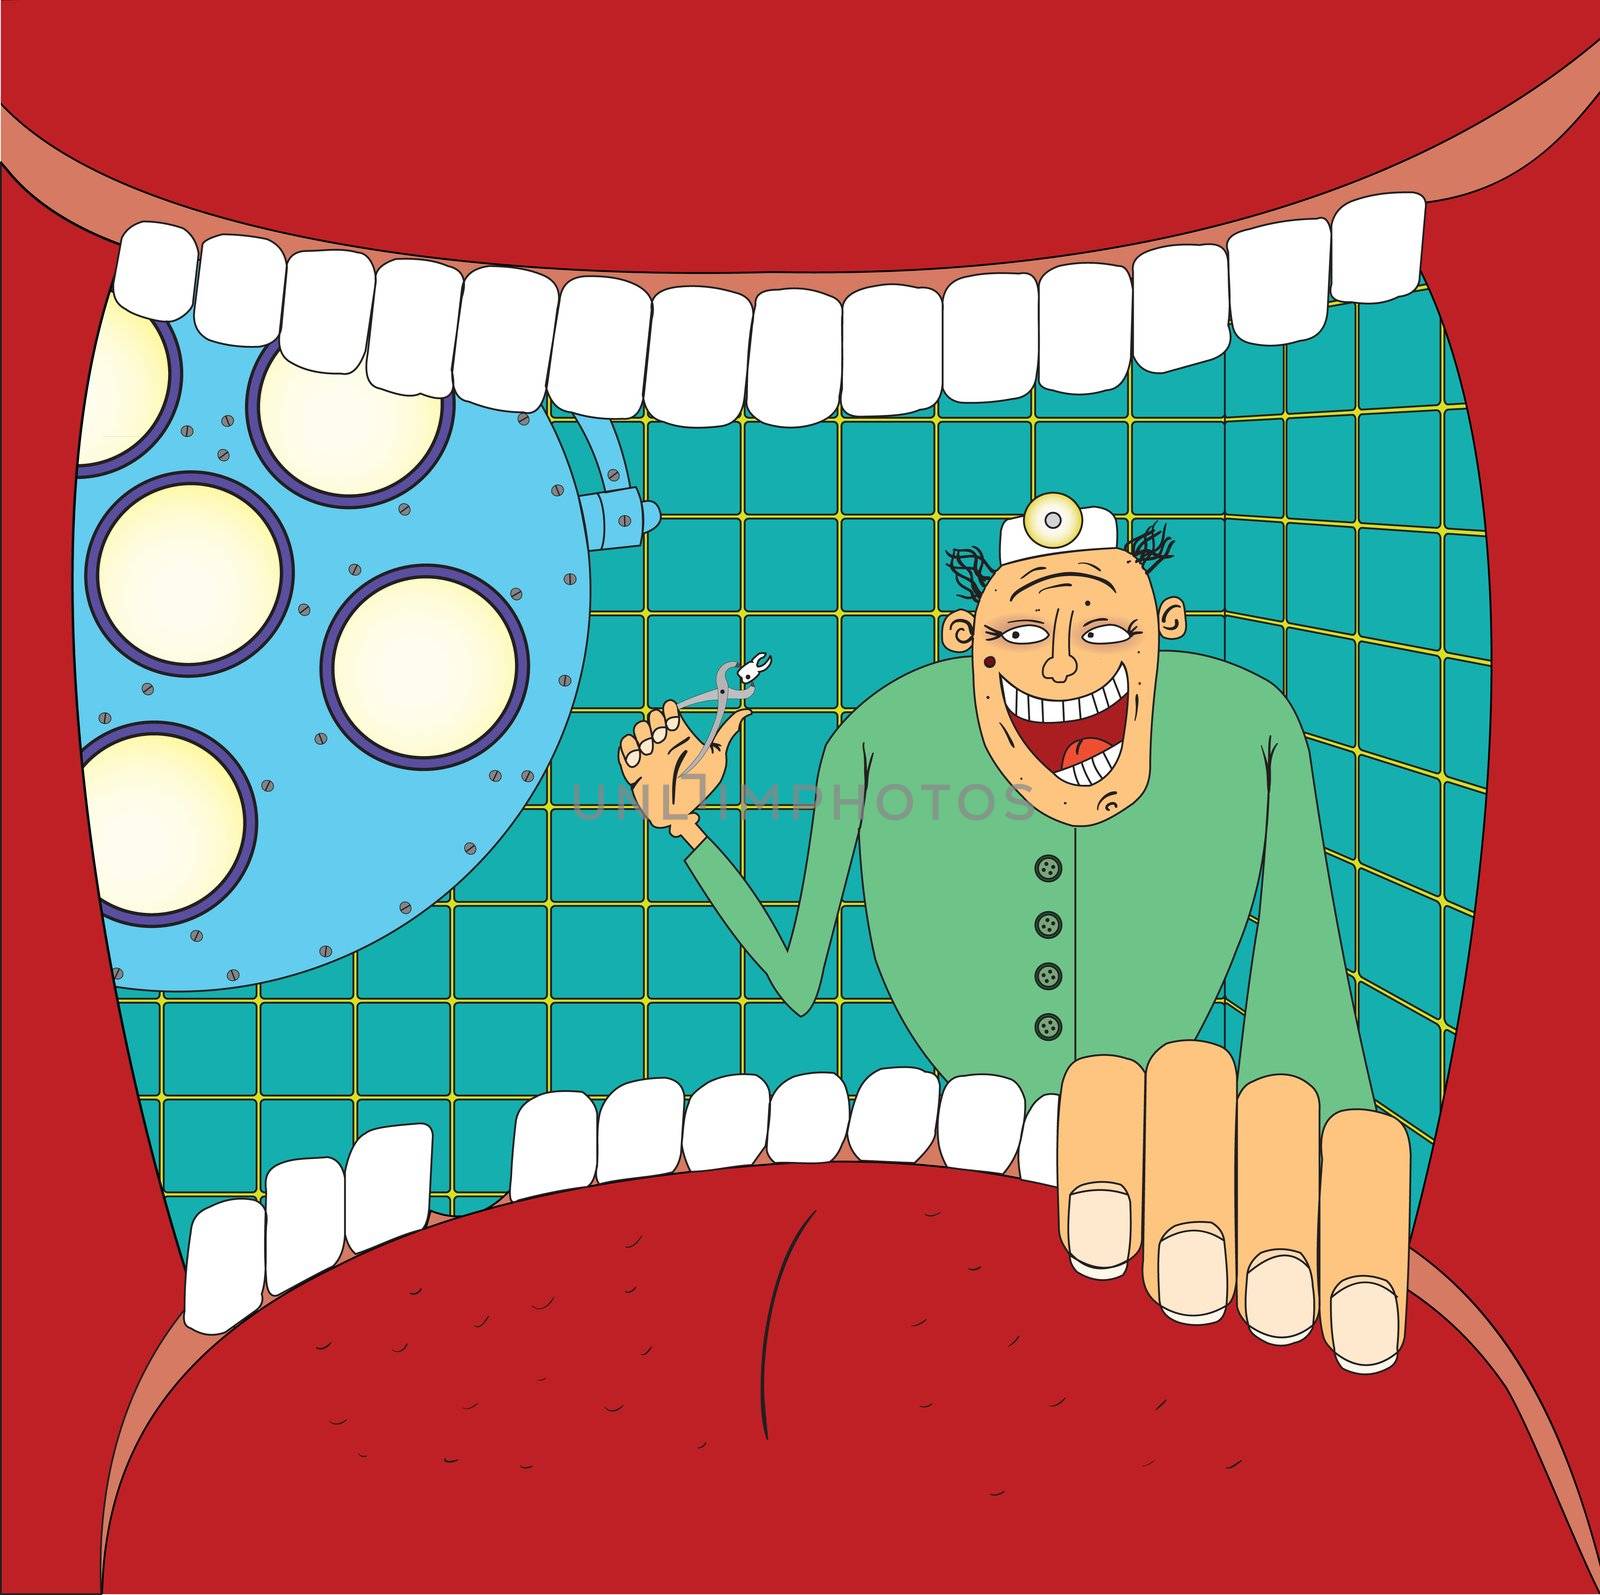 Funny Doctor stomatologist. Vector illustration EPS 10